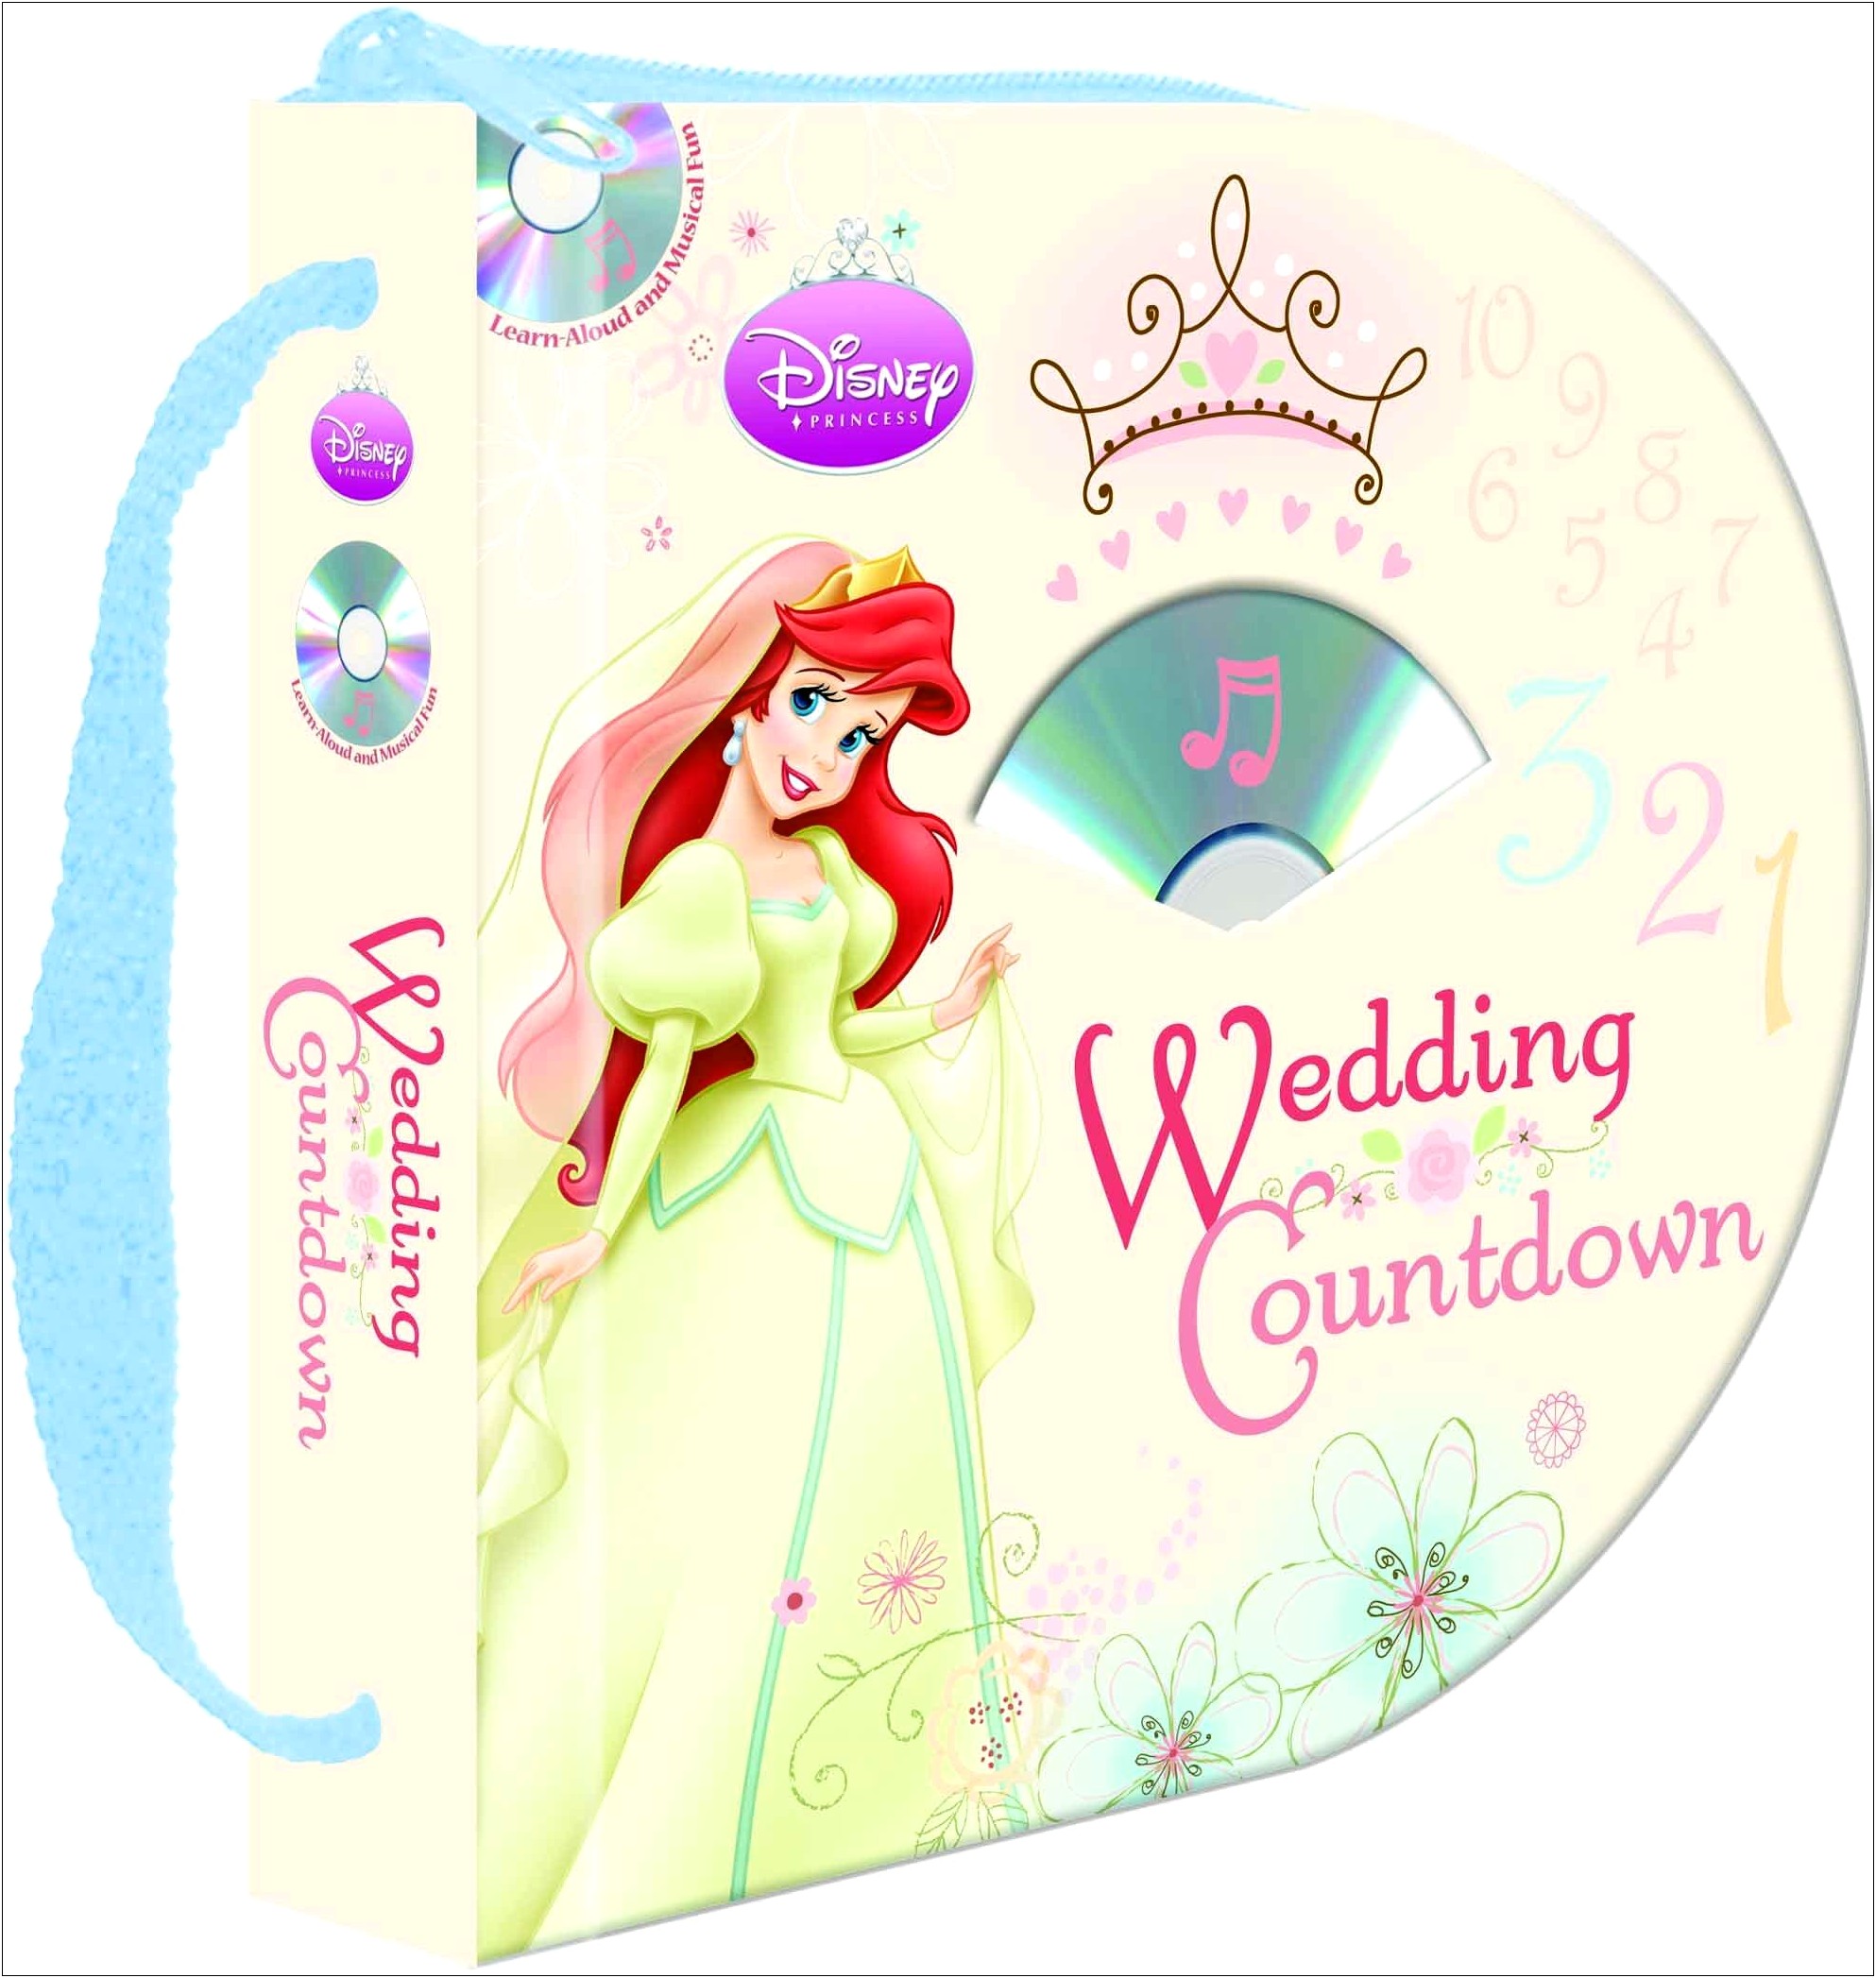 Send Wedding Invitation To Disney Princesses